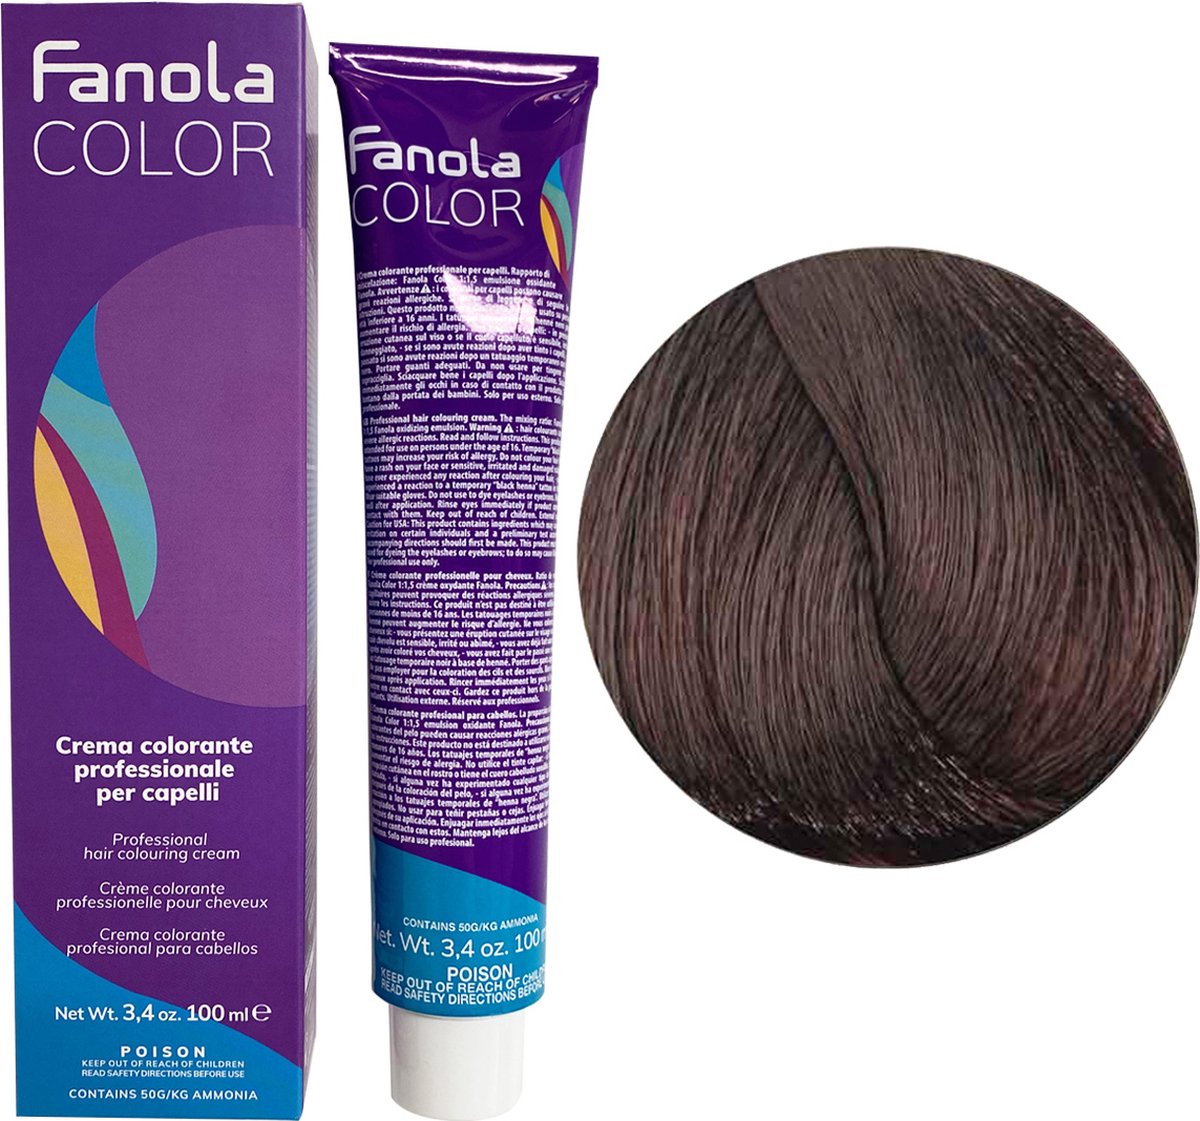 Fanola Haarverf Professional Colouring Cream 5.03 Warm Light Chestnut |  bol.com